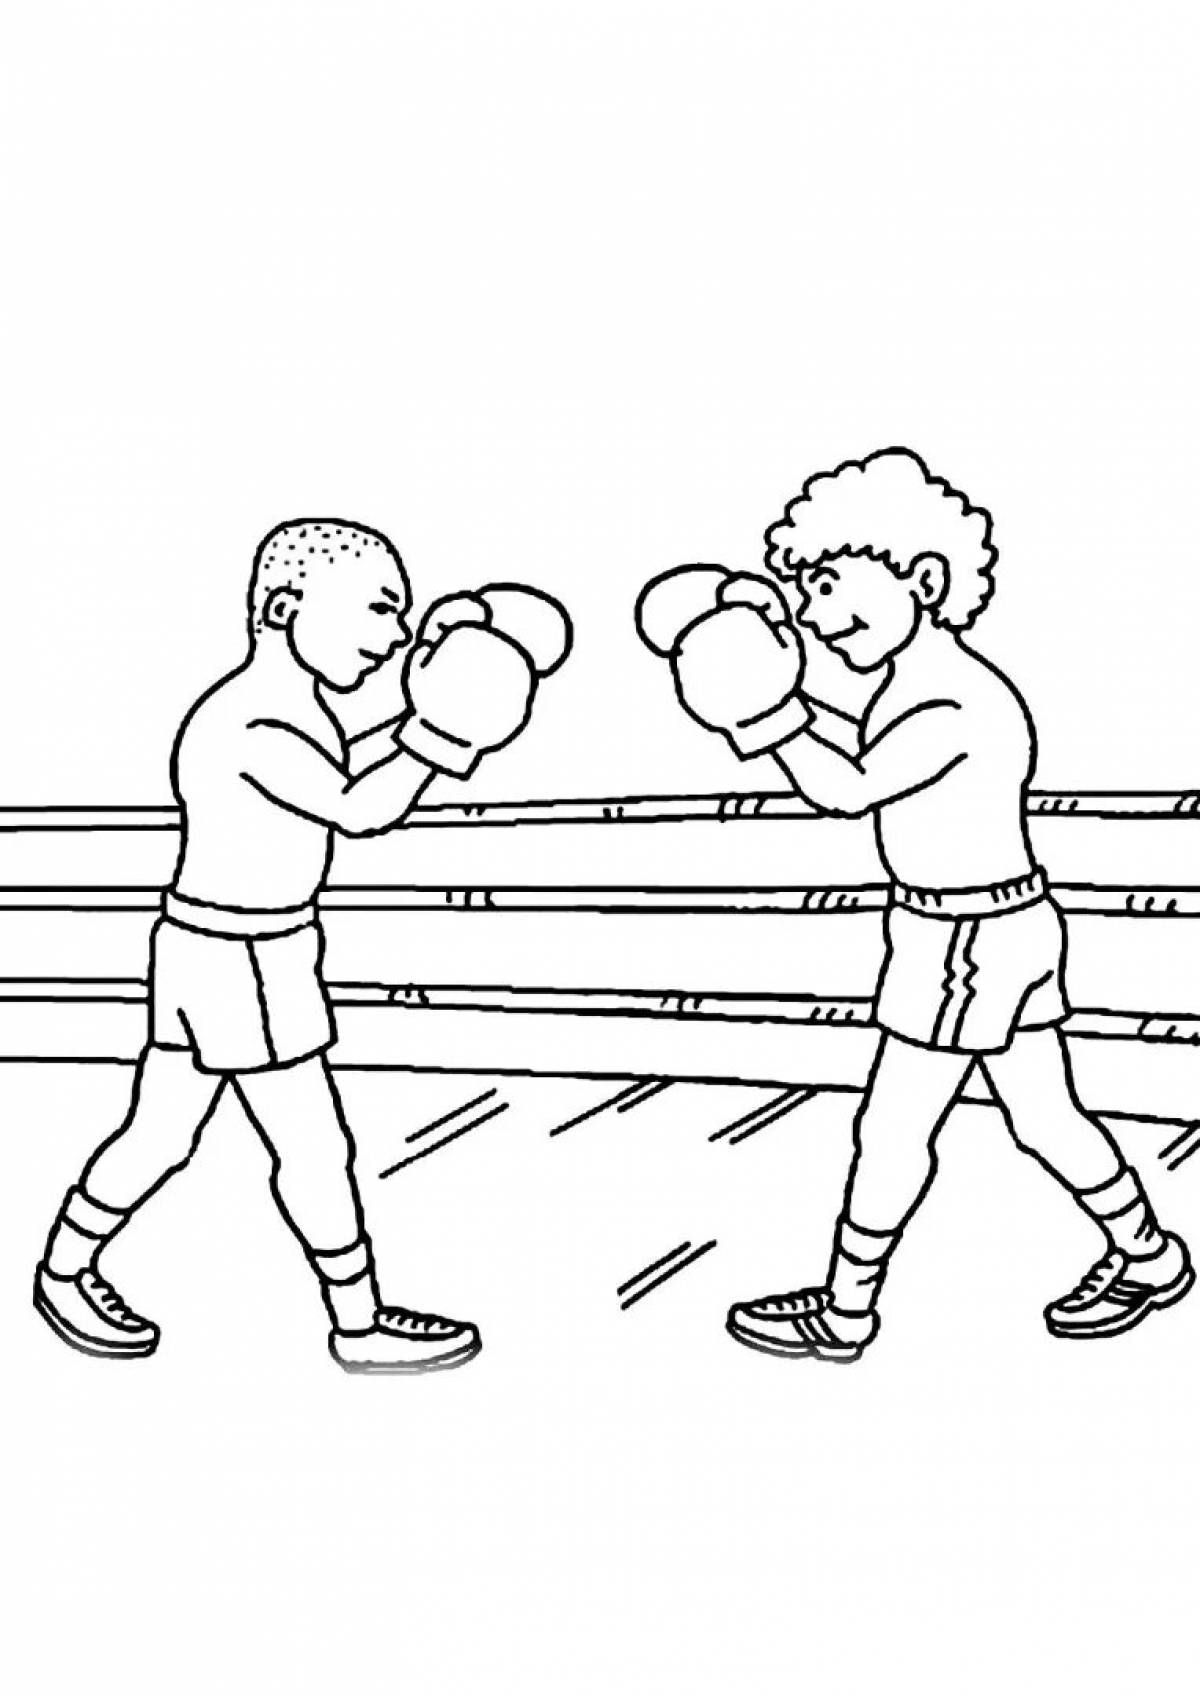 Раскраска Бокс | Раскраски на тему спорт. Спортивные раскраски